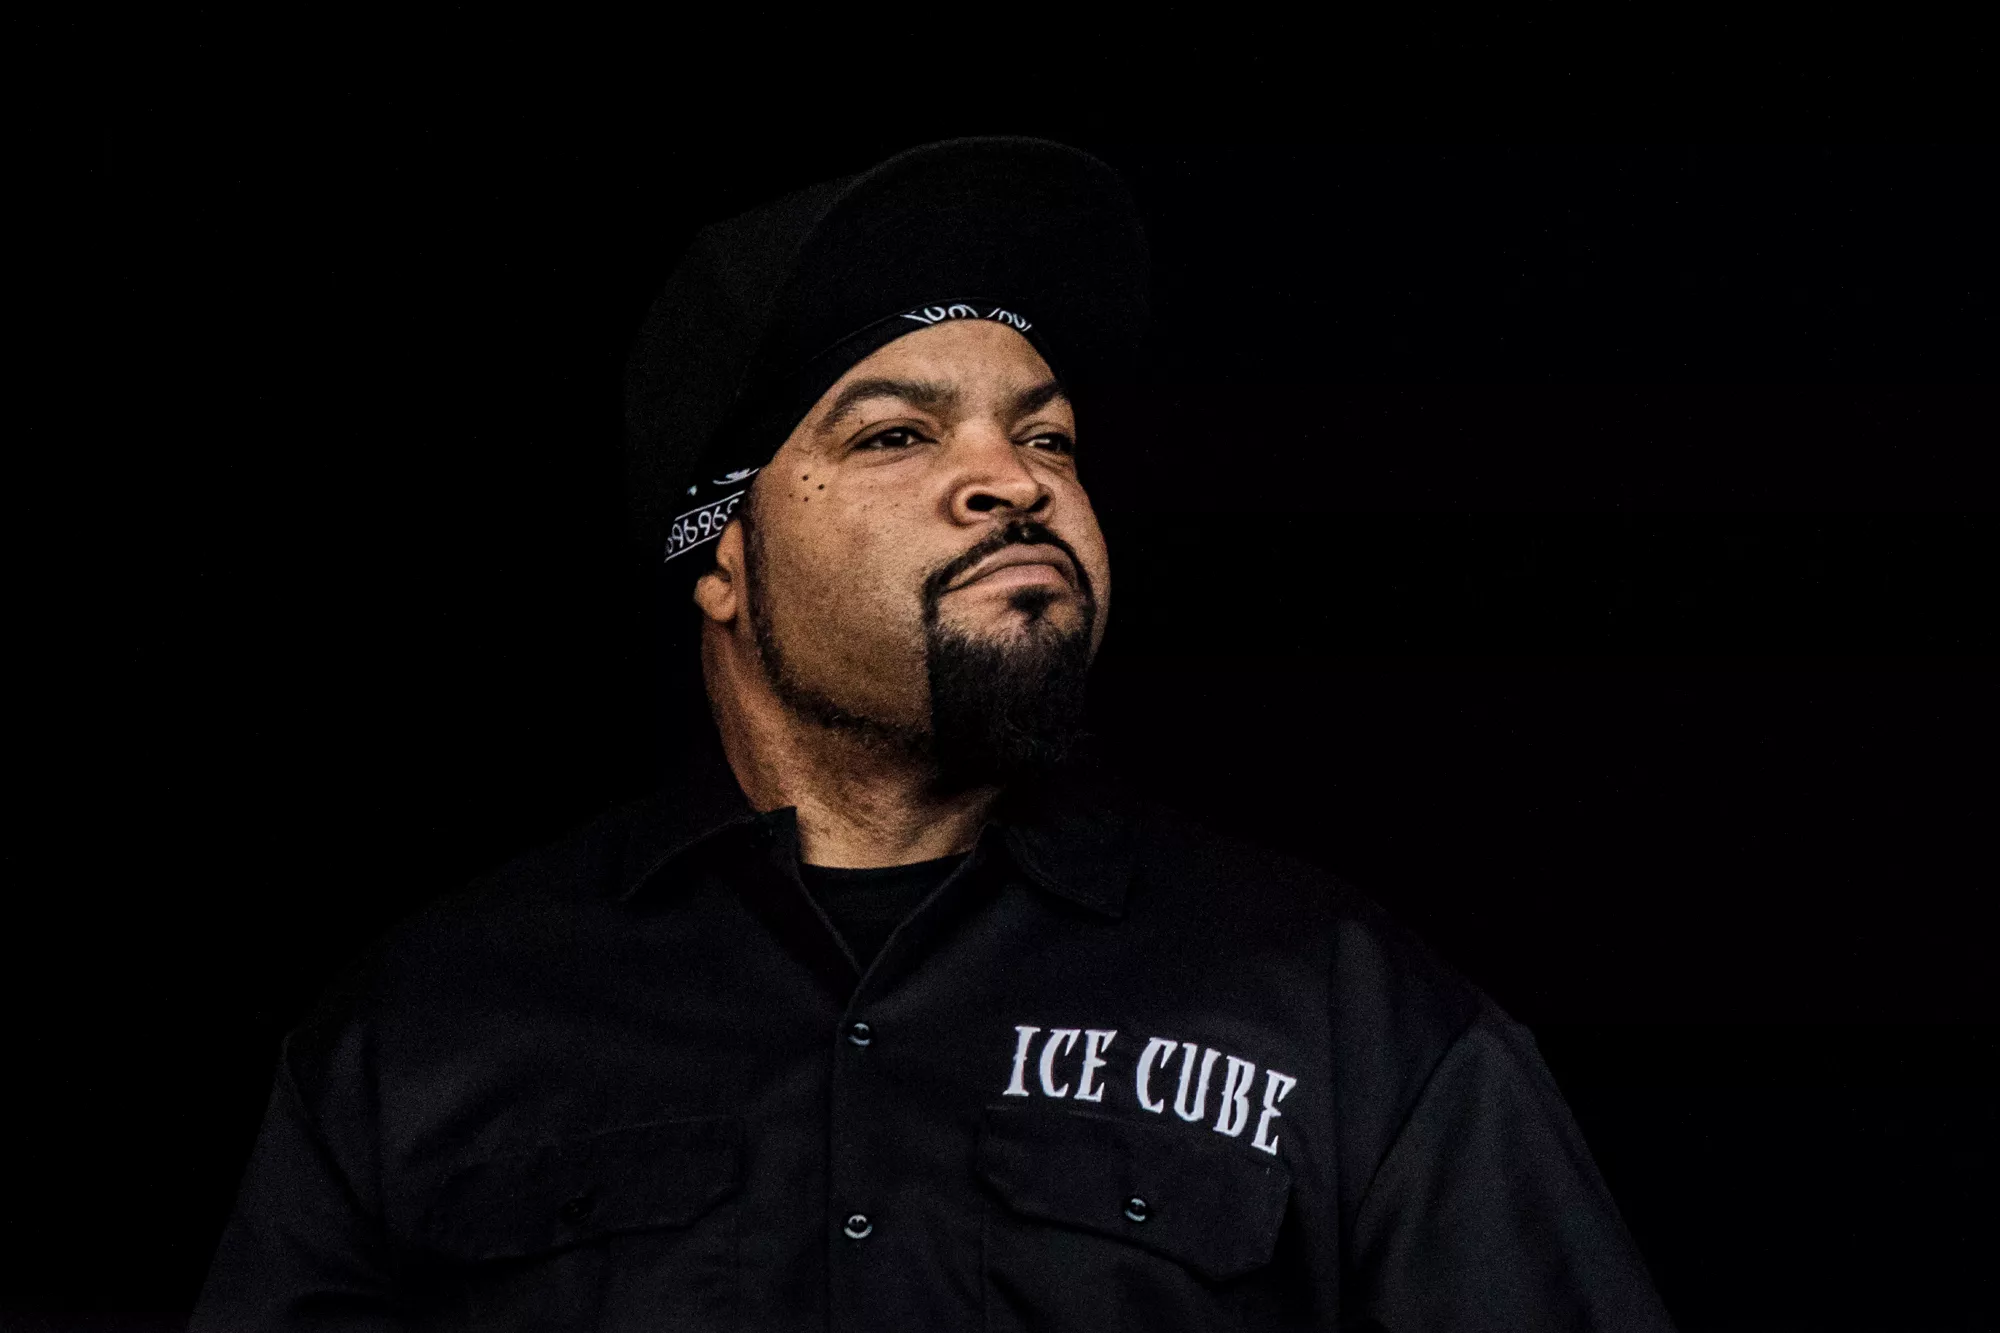 Hør Ice Cubes nye single "Arrest The President"